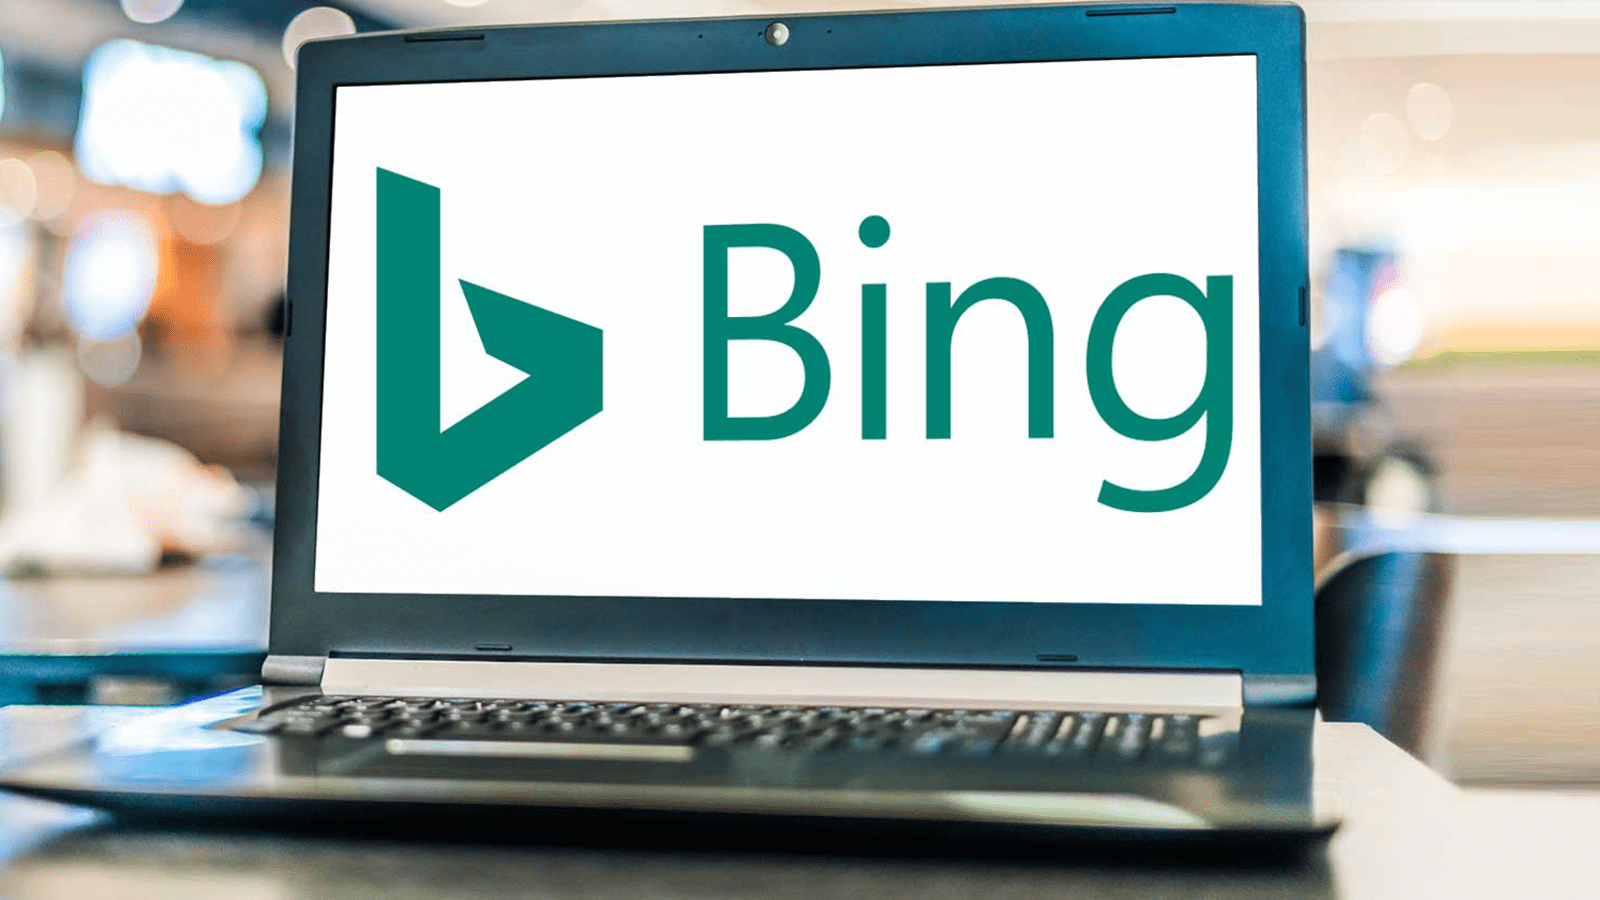 Bing webmaster tools gets an upgrade!